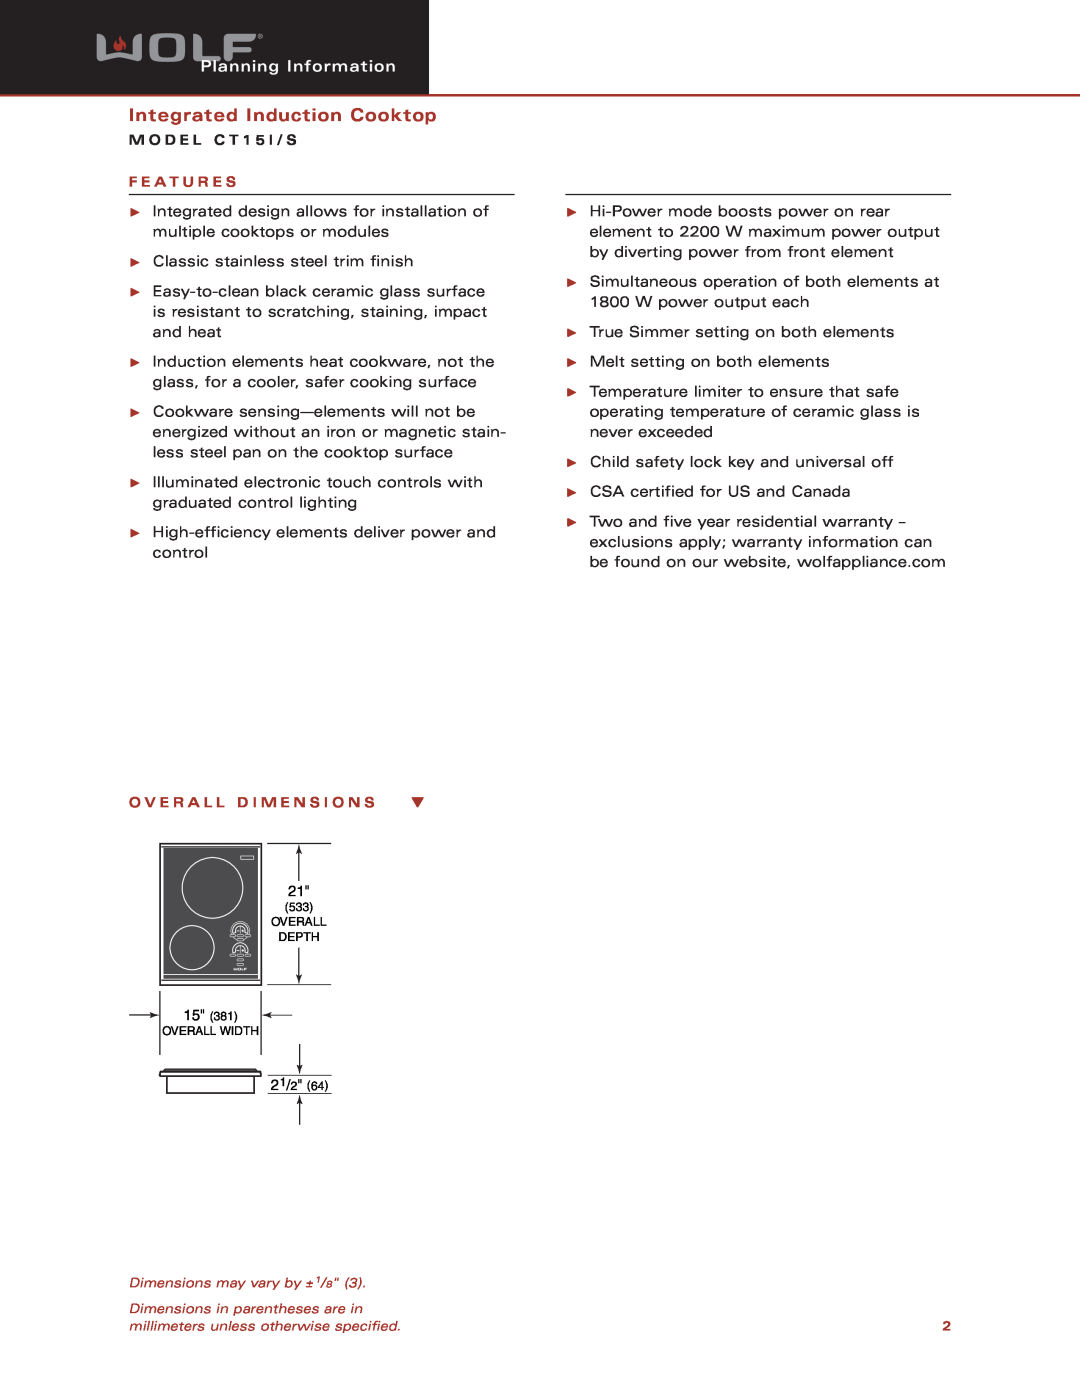 Sub-Zero CT15I/S dimensions Integrated Induction Cooktop, Planning Information, M O D E L C T 1 5 I / S, F E A T U R E S 